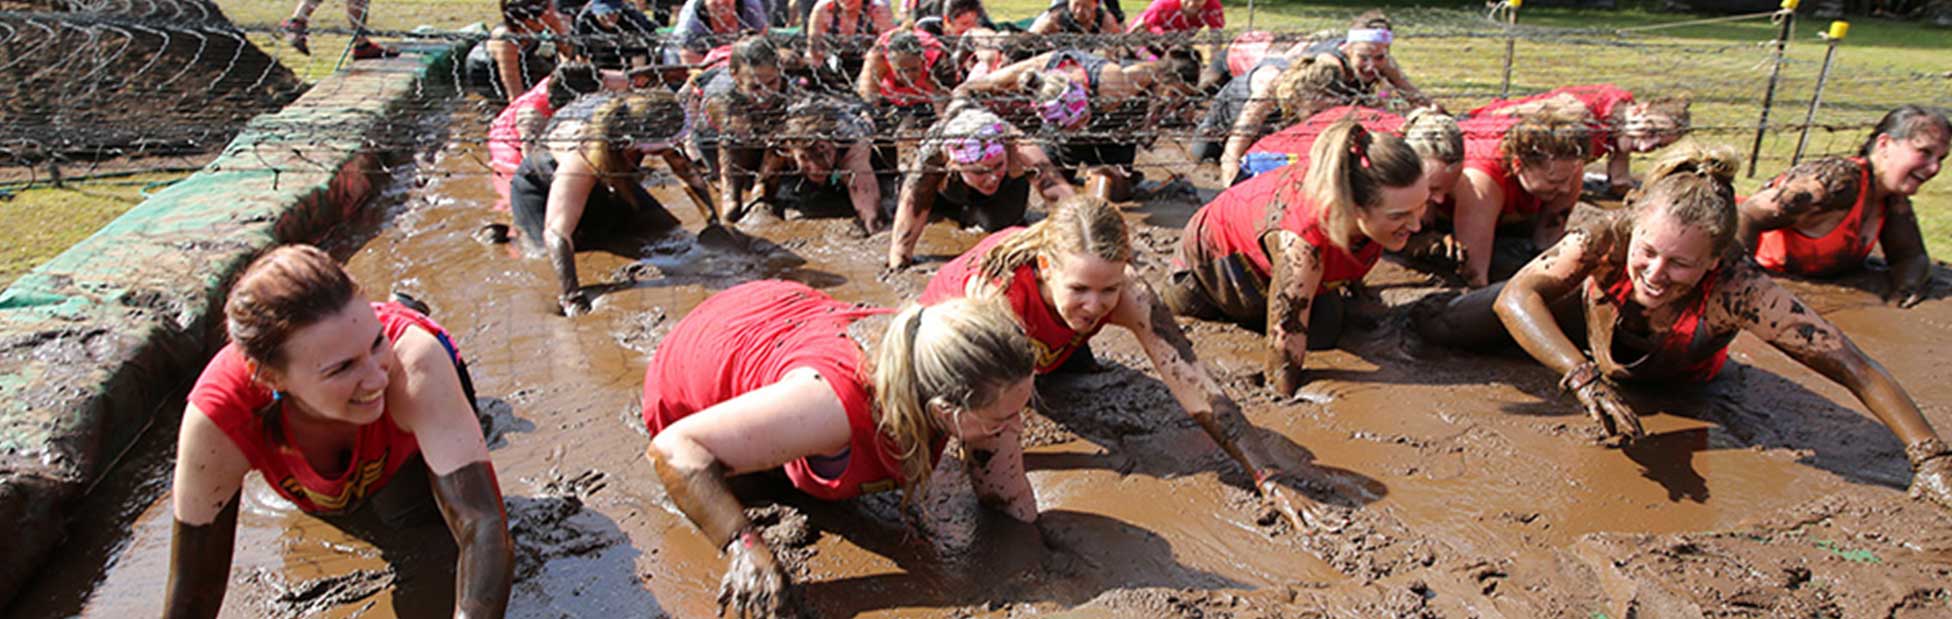 Females running through mud